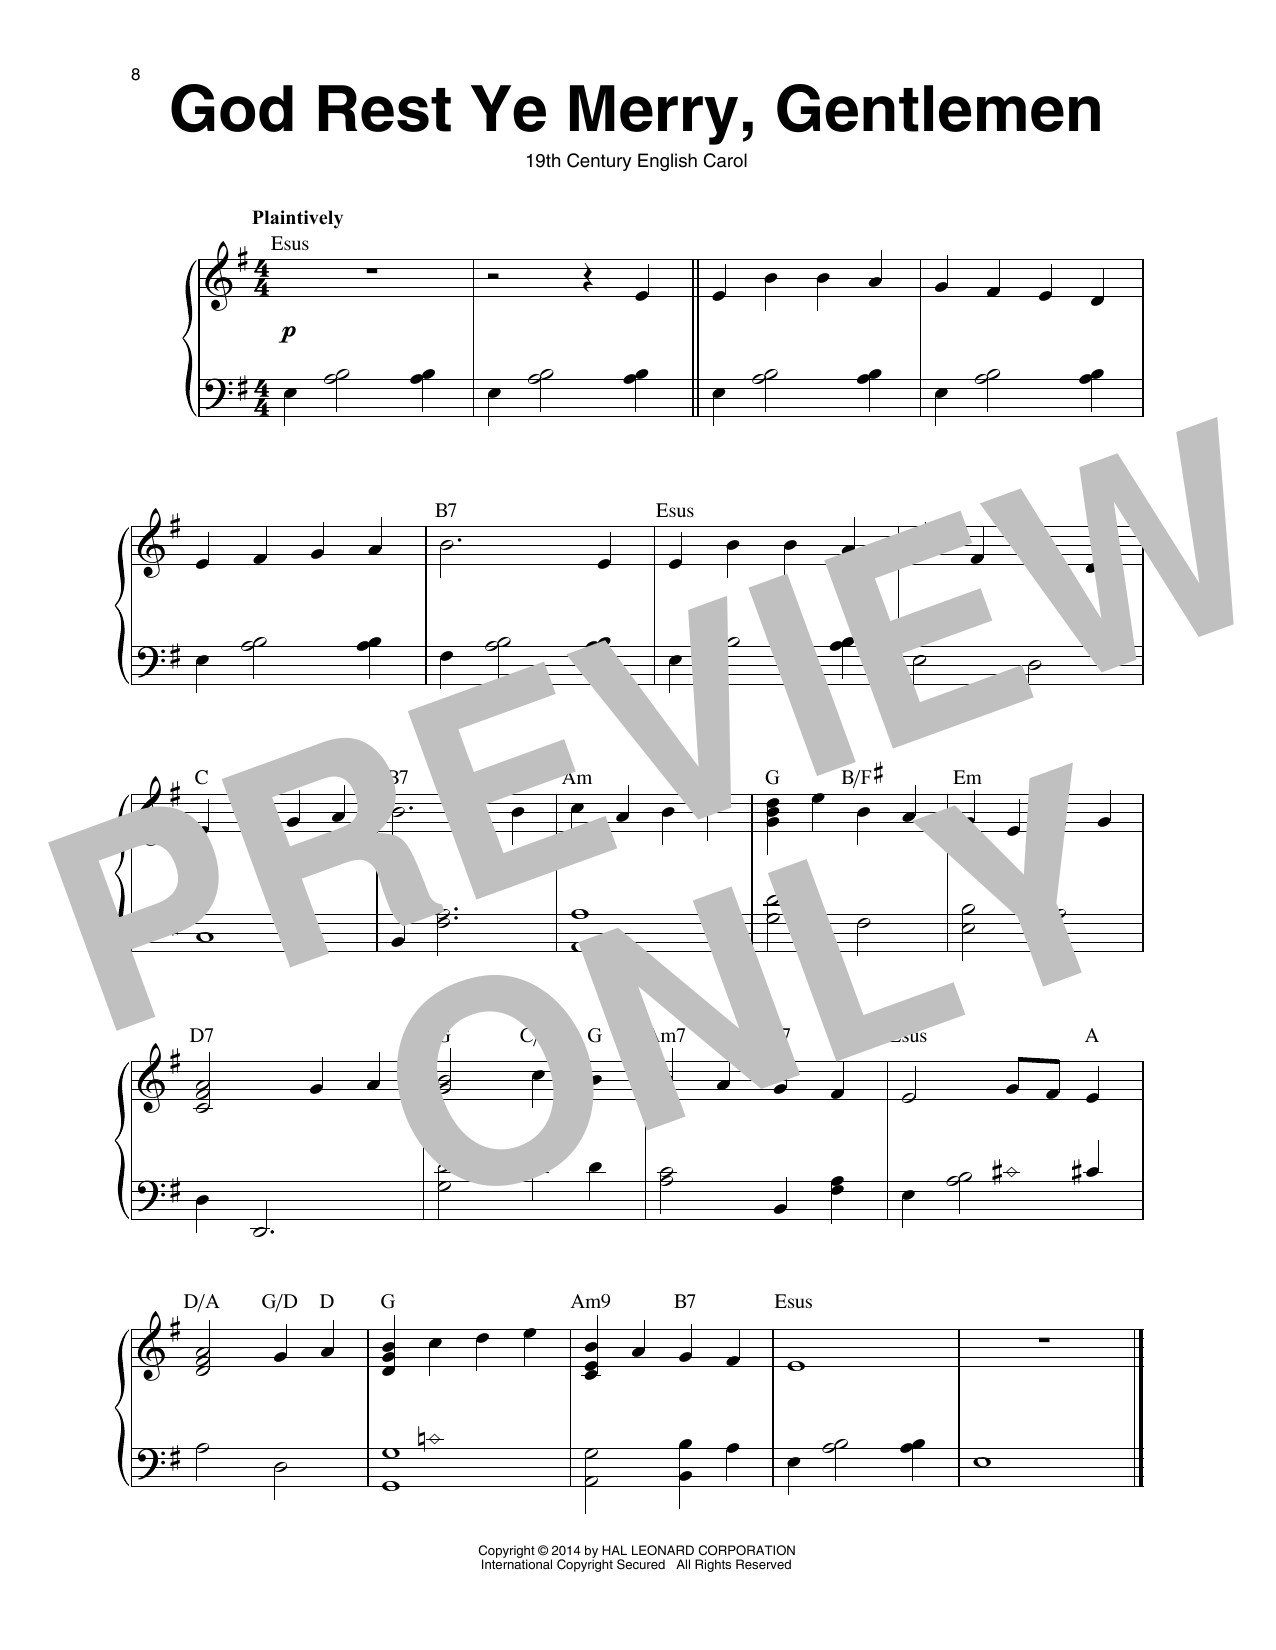 Traditional English Carol God Rest Ye Merry, Gentlemen (arr. Maeve Gilchrist) Sheet Music Notes & Chords for Harp - Download or Print PDF